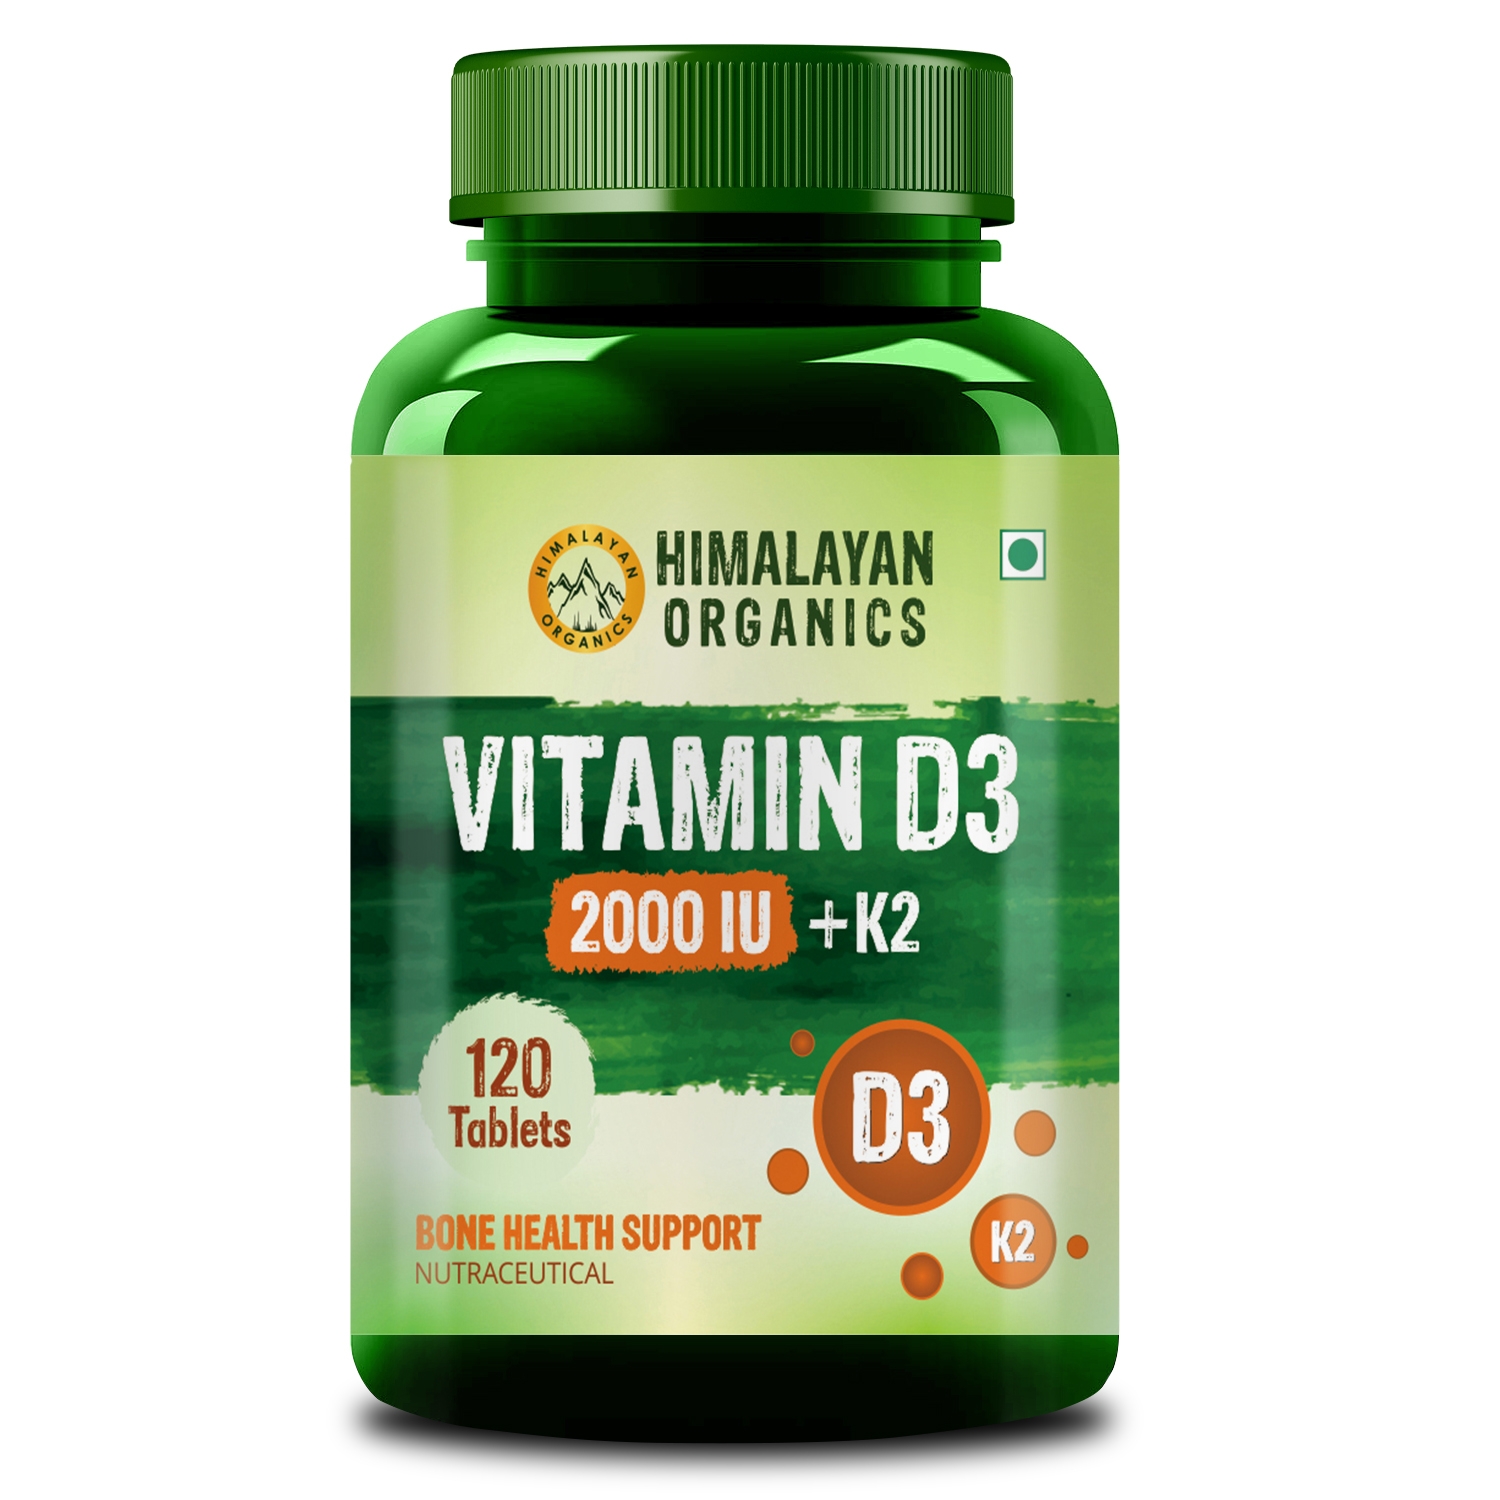 Himalayan Organics | Himalayan Organics Vitamin D3 2000 IU Supplement + Vitamin K2 as Mk7 | Supports Stronger Immunity & Bone & Heart Health - 120 Veg Tablets